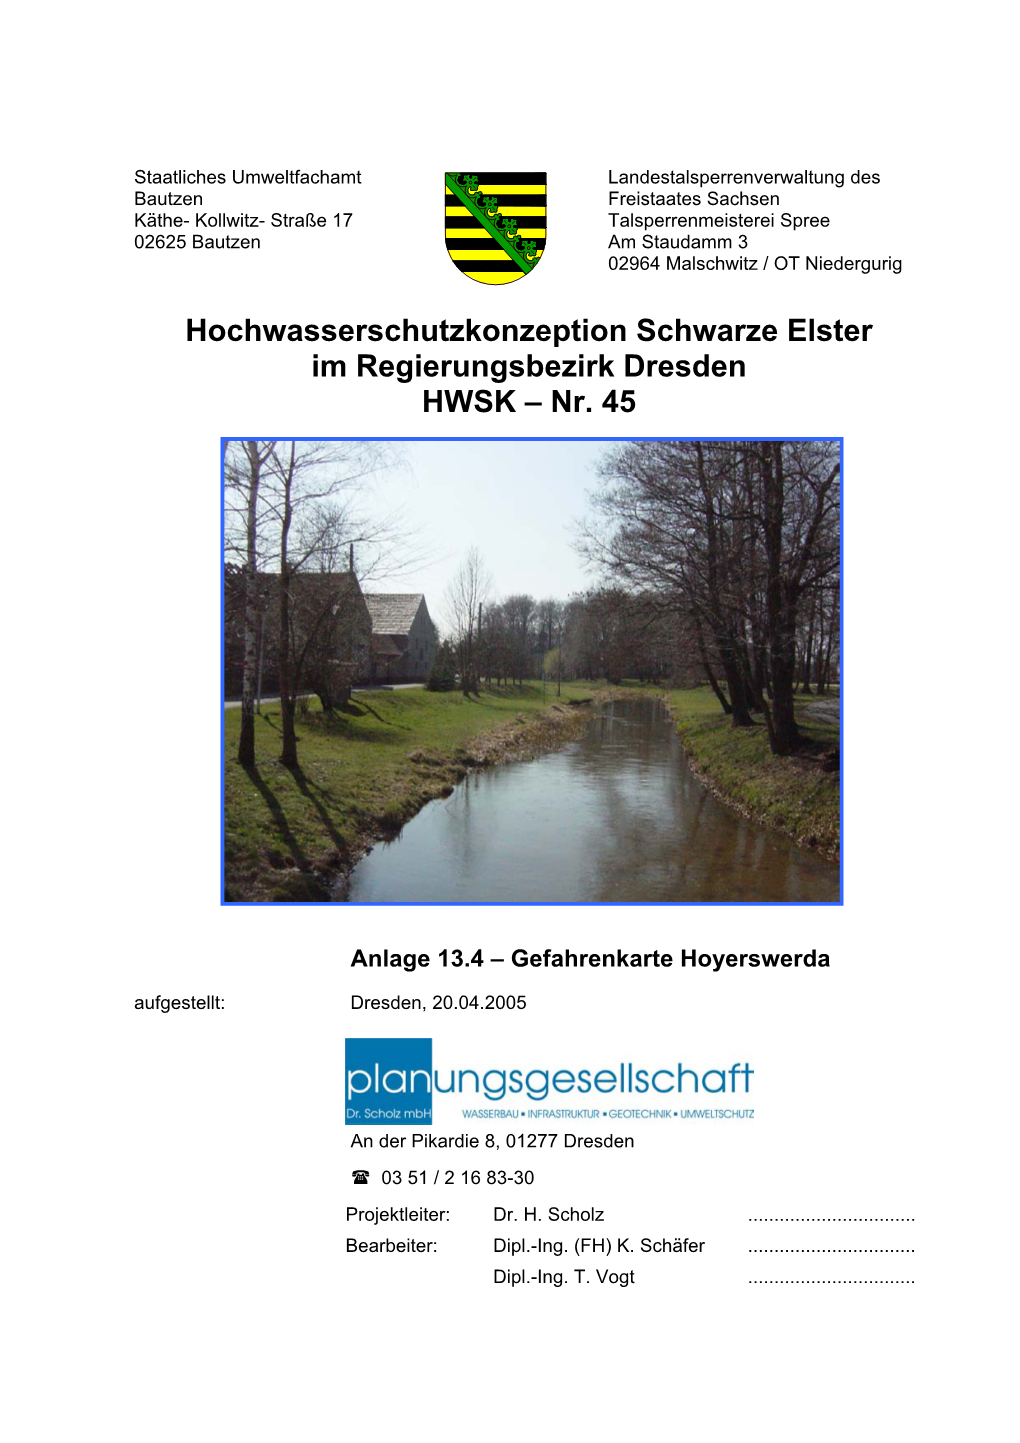 HWSK-Nr. 45, Gefahrenkarte Stadt Hoyerswerda